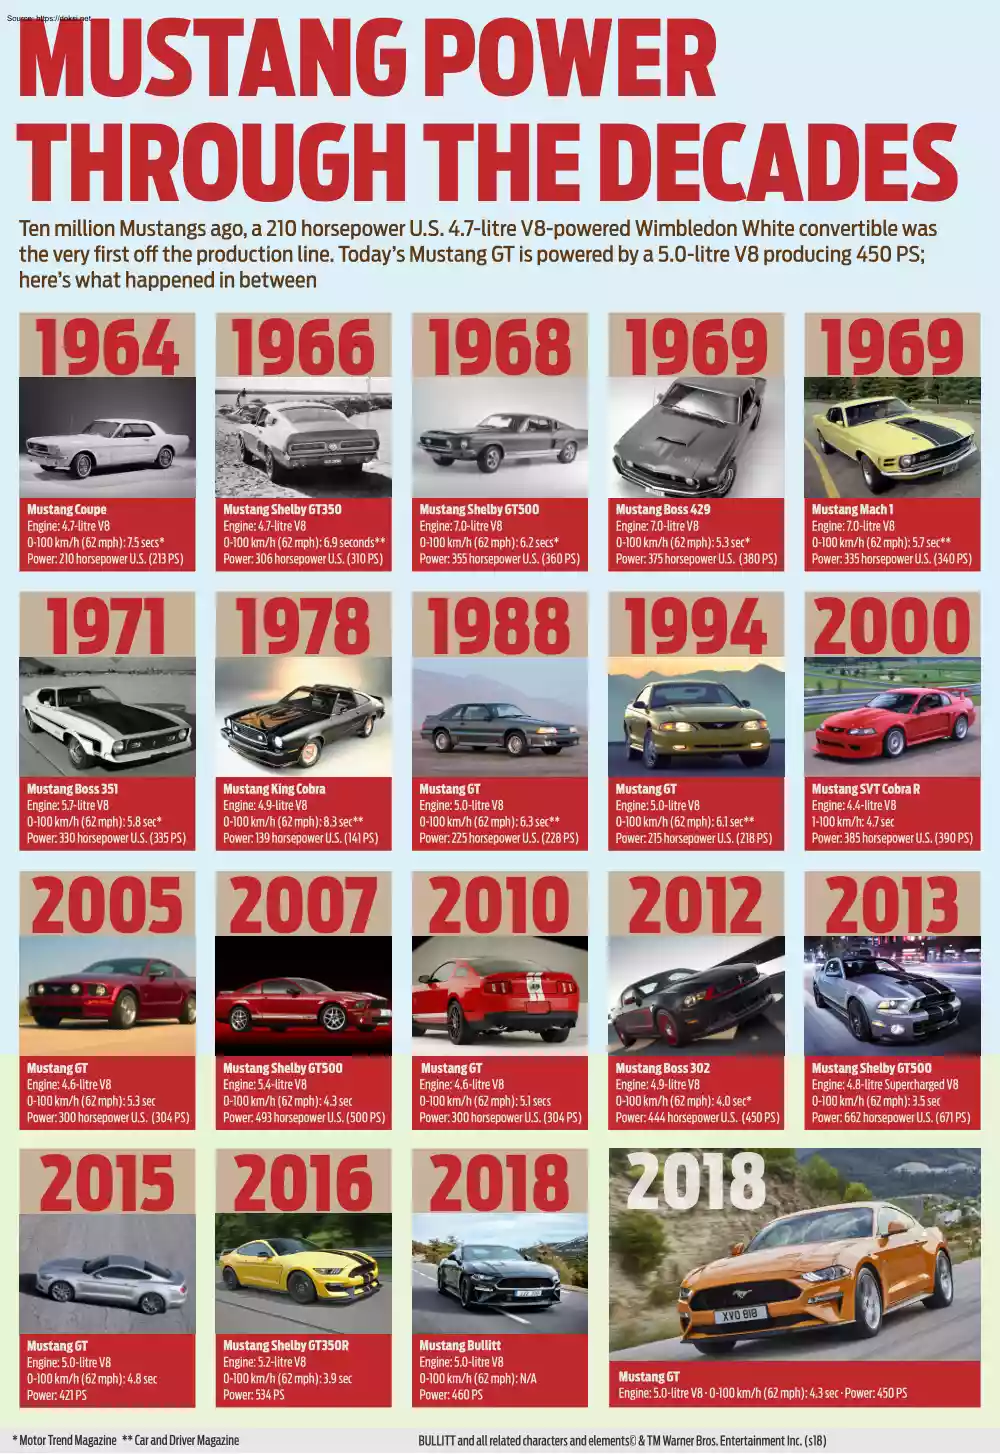 Mustang Power Through the Decades